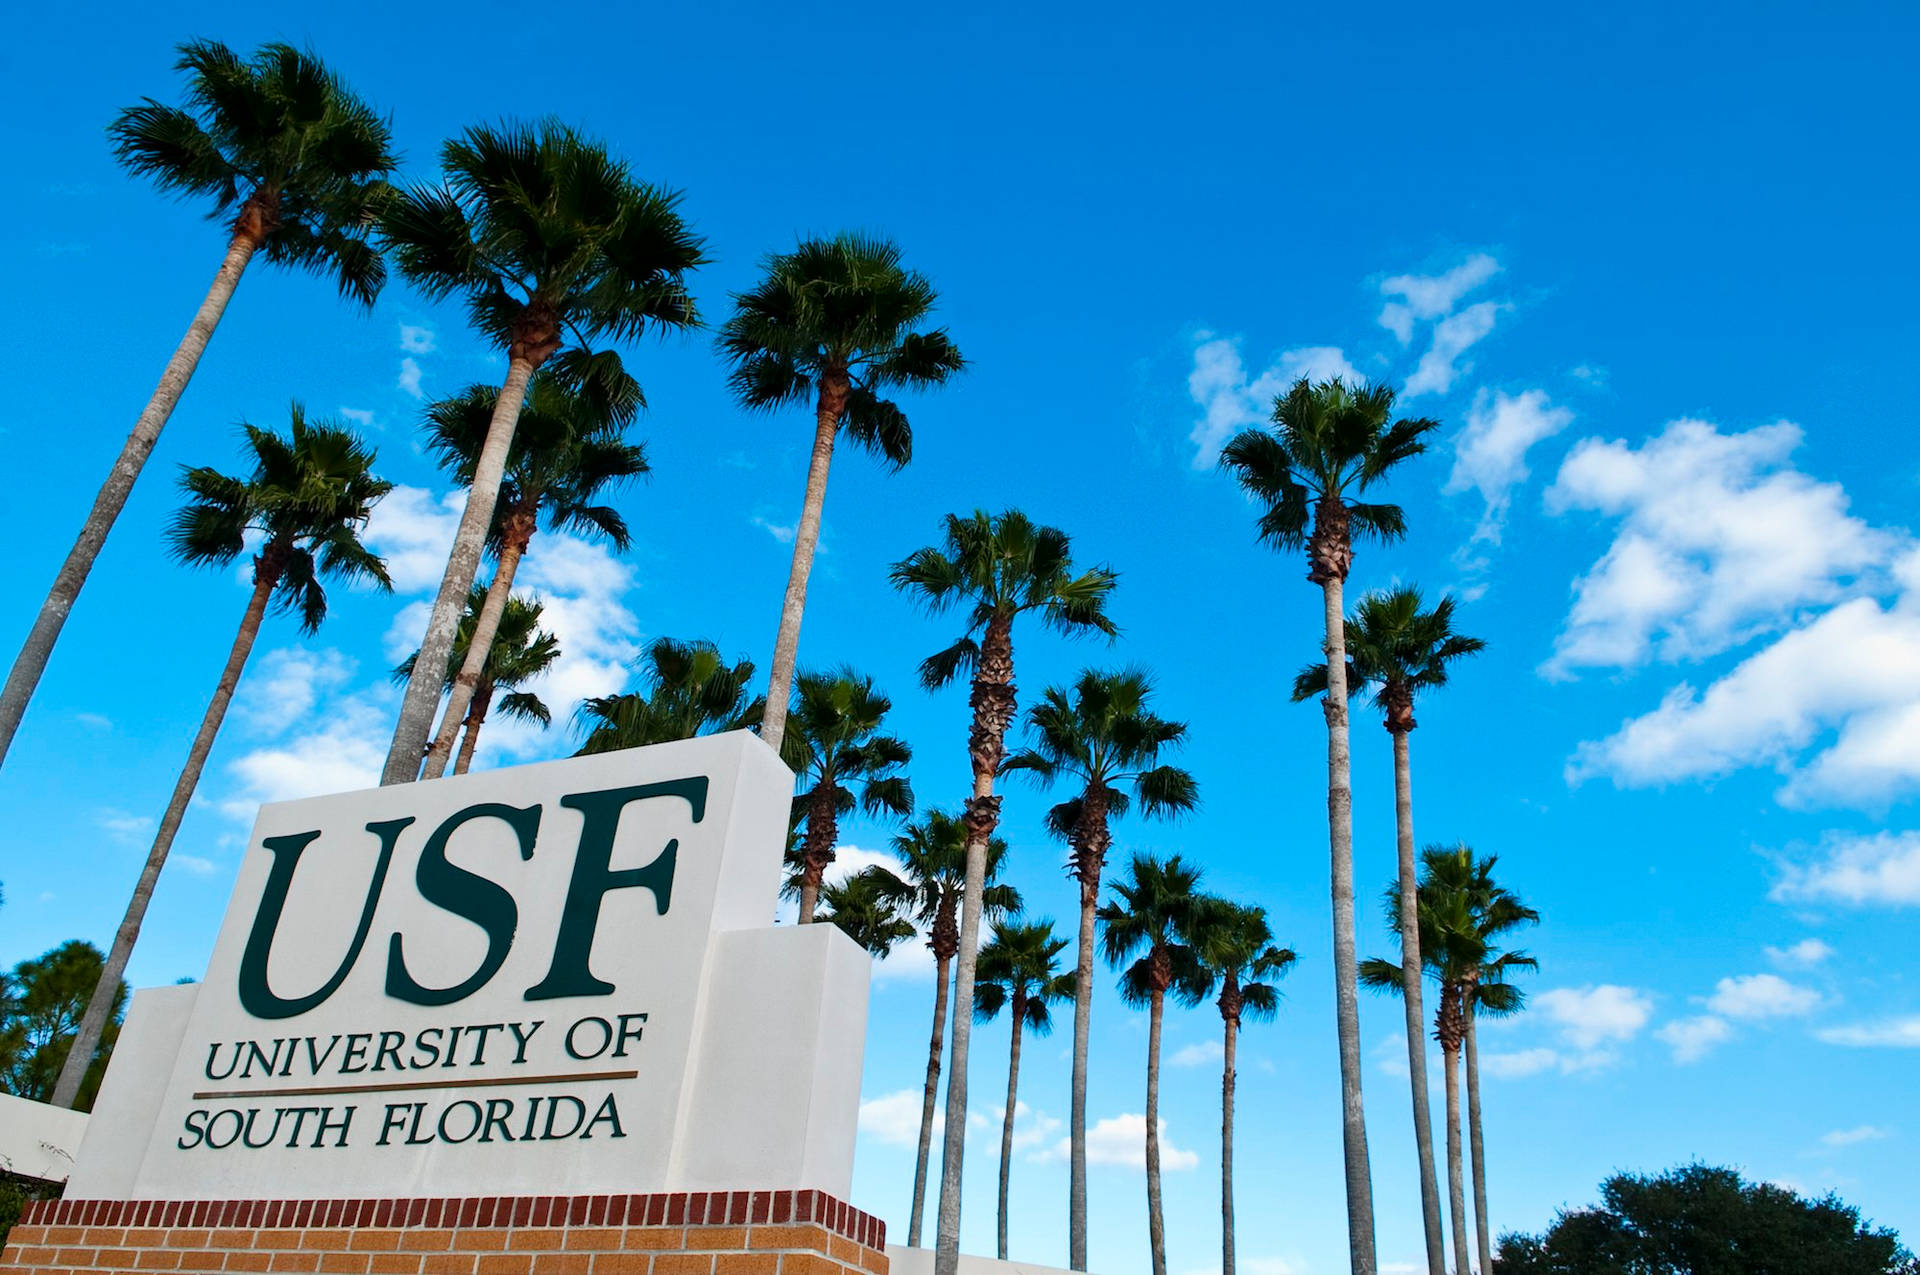 University Of South Florida Palm Trees Wallpaper